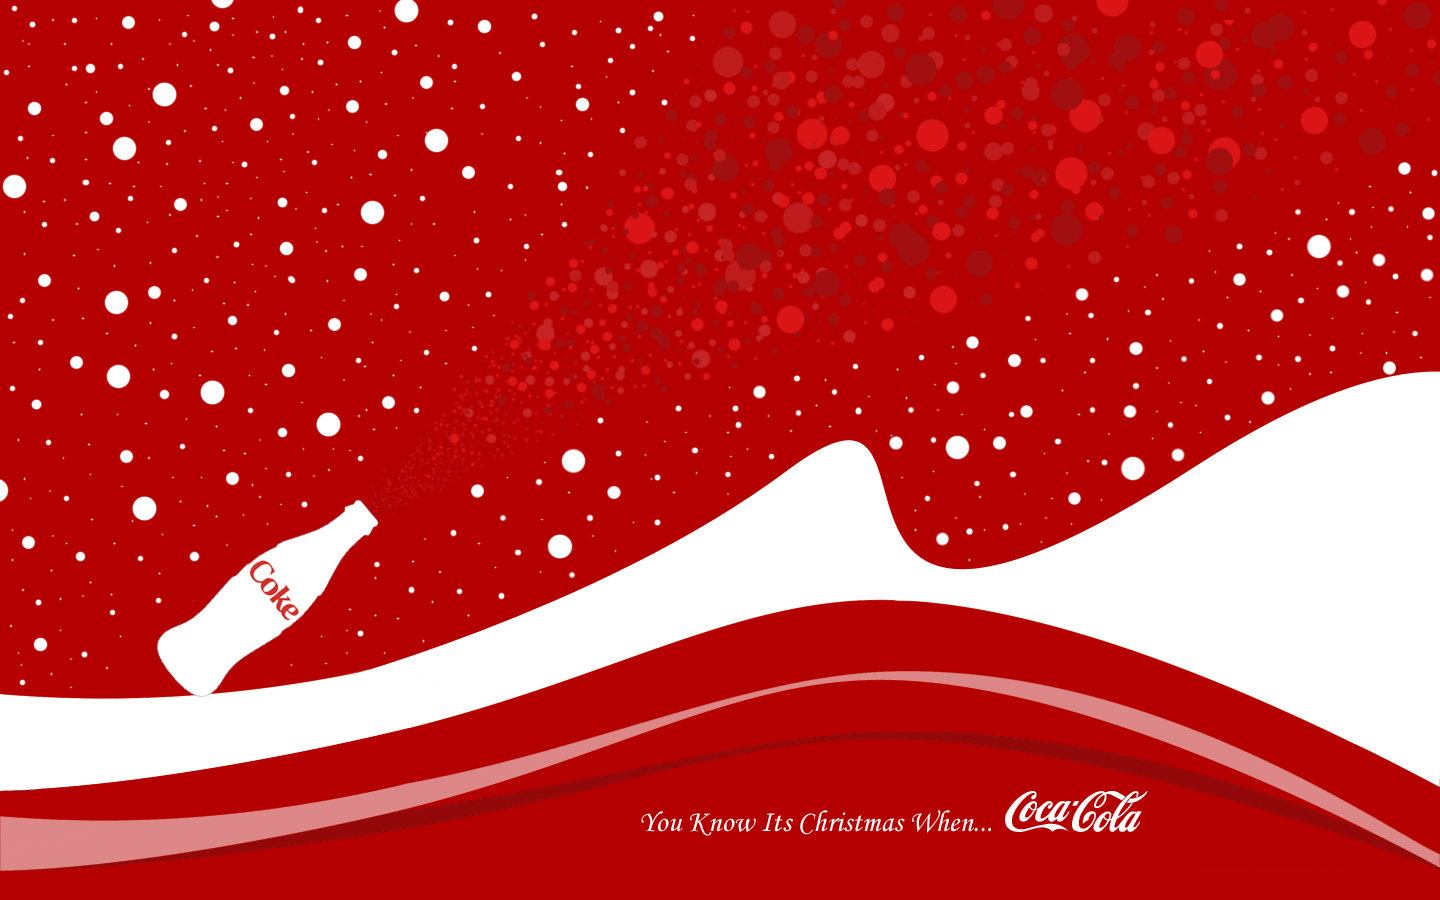 21+] Coca Cola Christmas Wallpaper on WallpaperSafari With Regard To Coca Cola Powerpoint Template